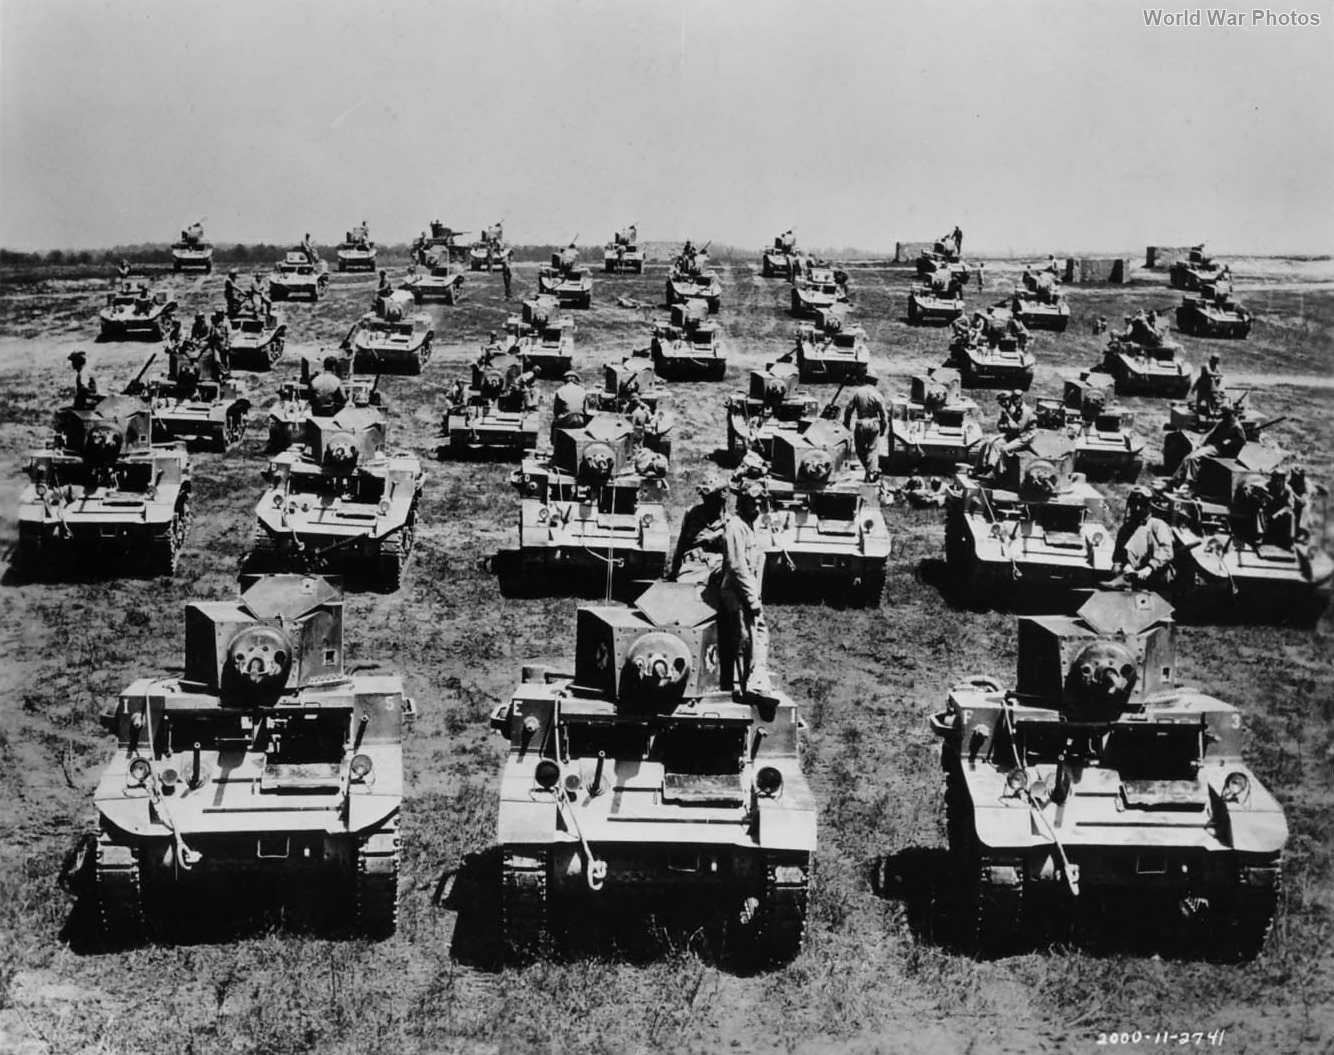 M3 light tanks of the Calvary during maneuvers